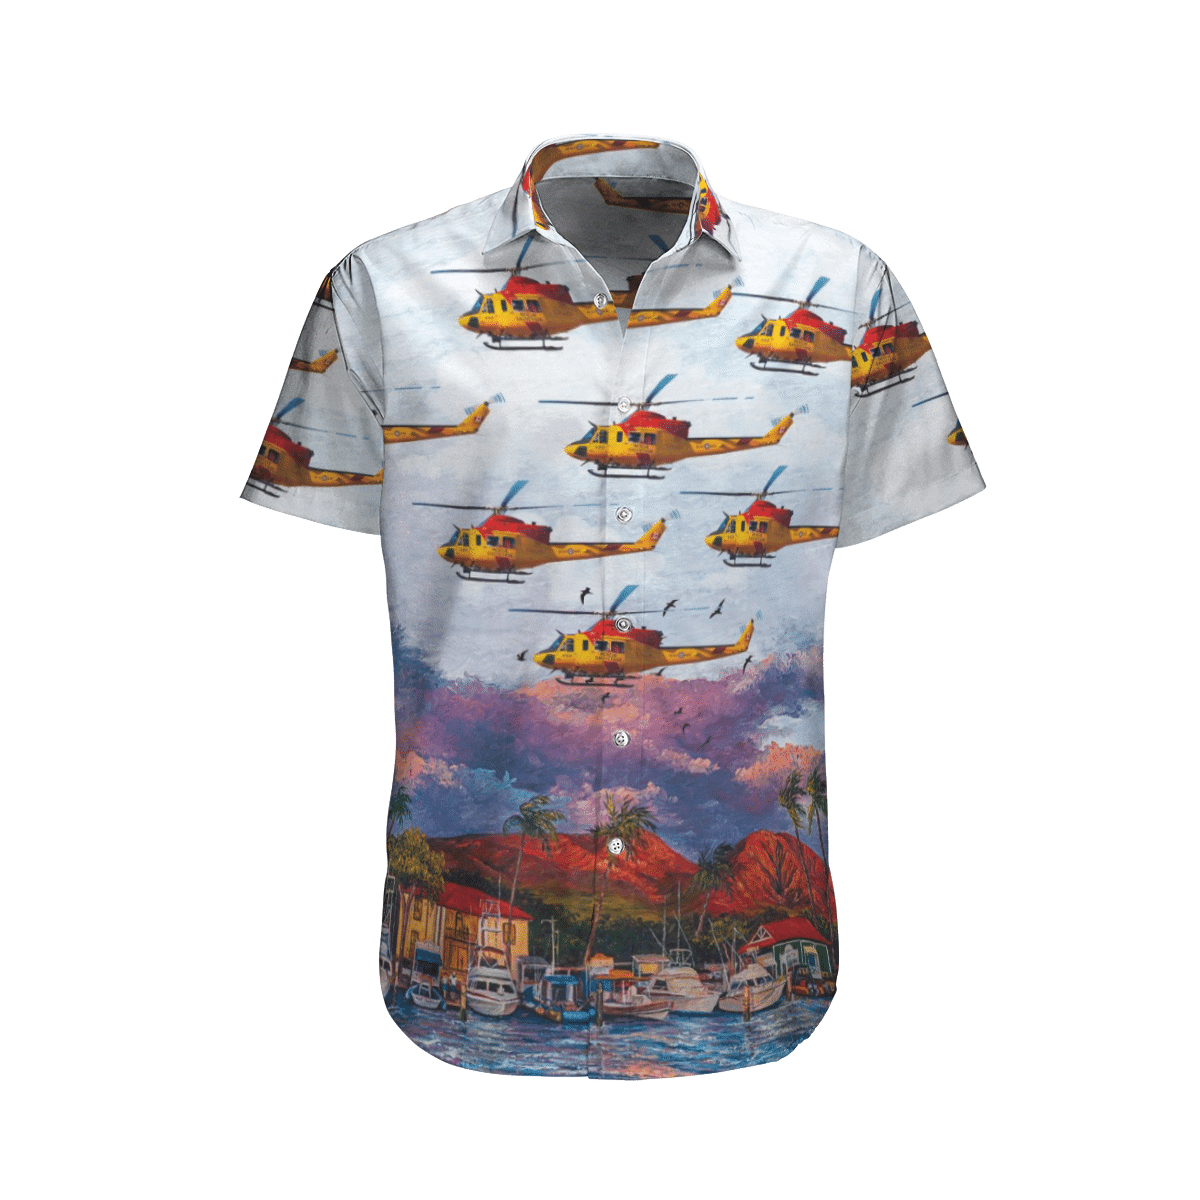 Get a new Hawaiian shirt to enjoy summer vacation 102